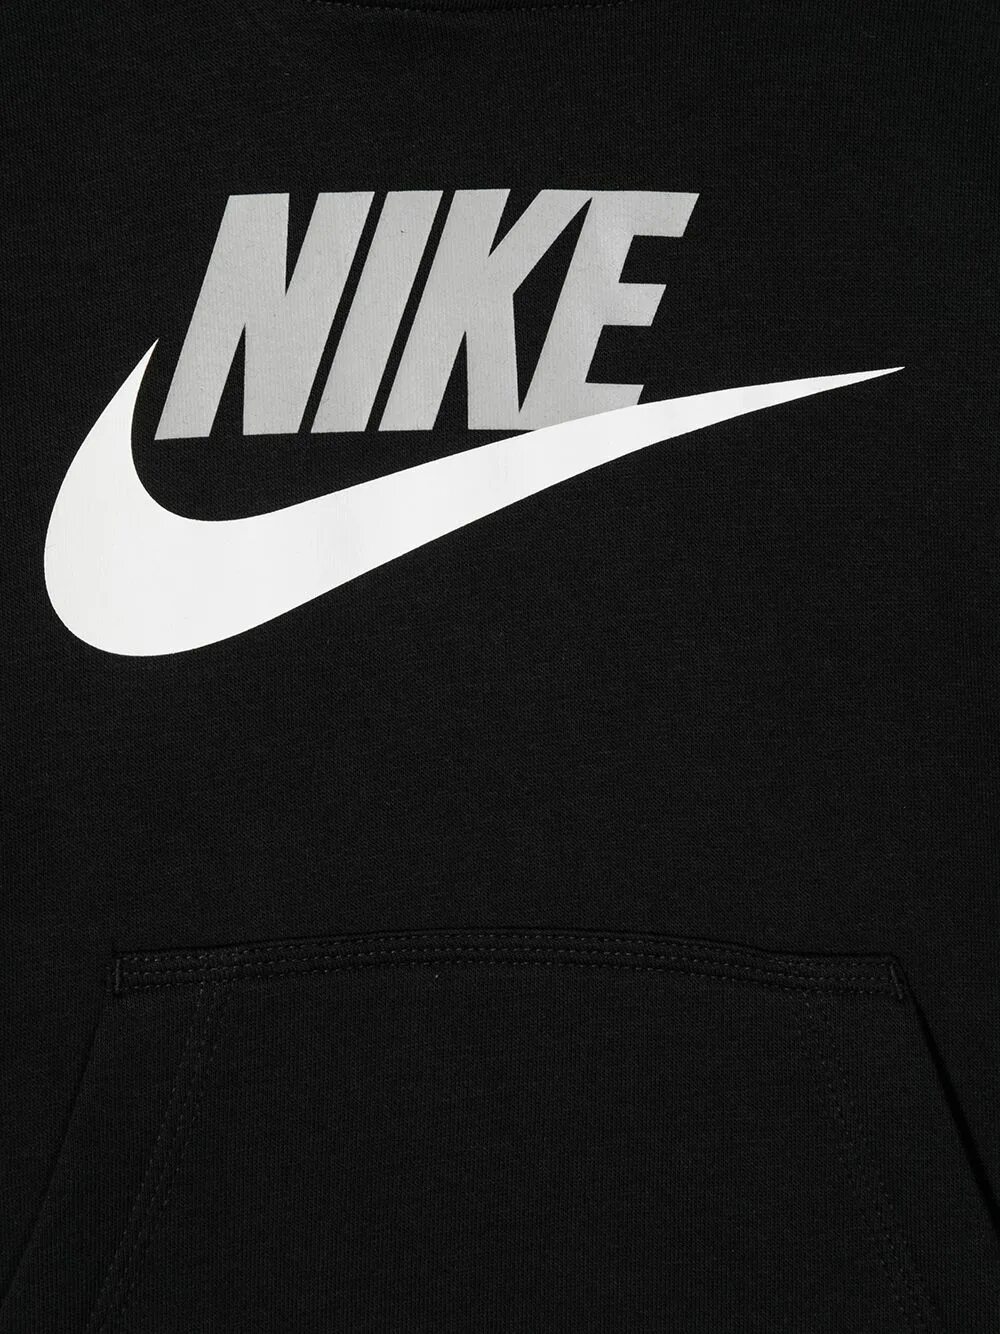 Город найка. Найк. Nike знак. Бренд найк логотип. Nike логотип на магазине.